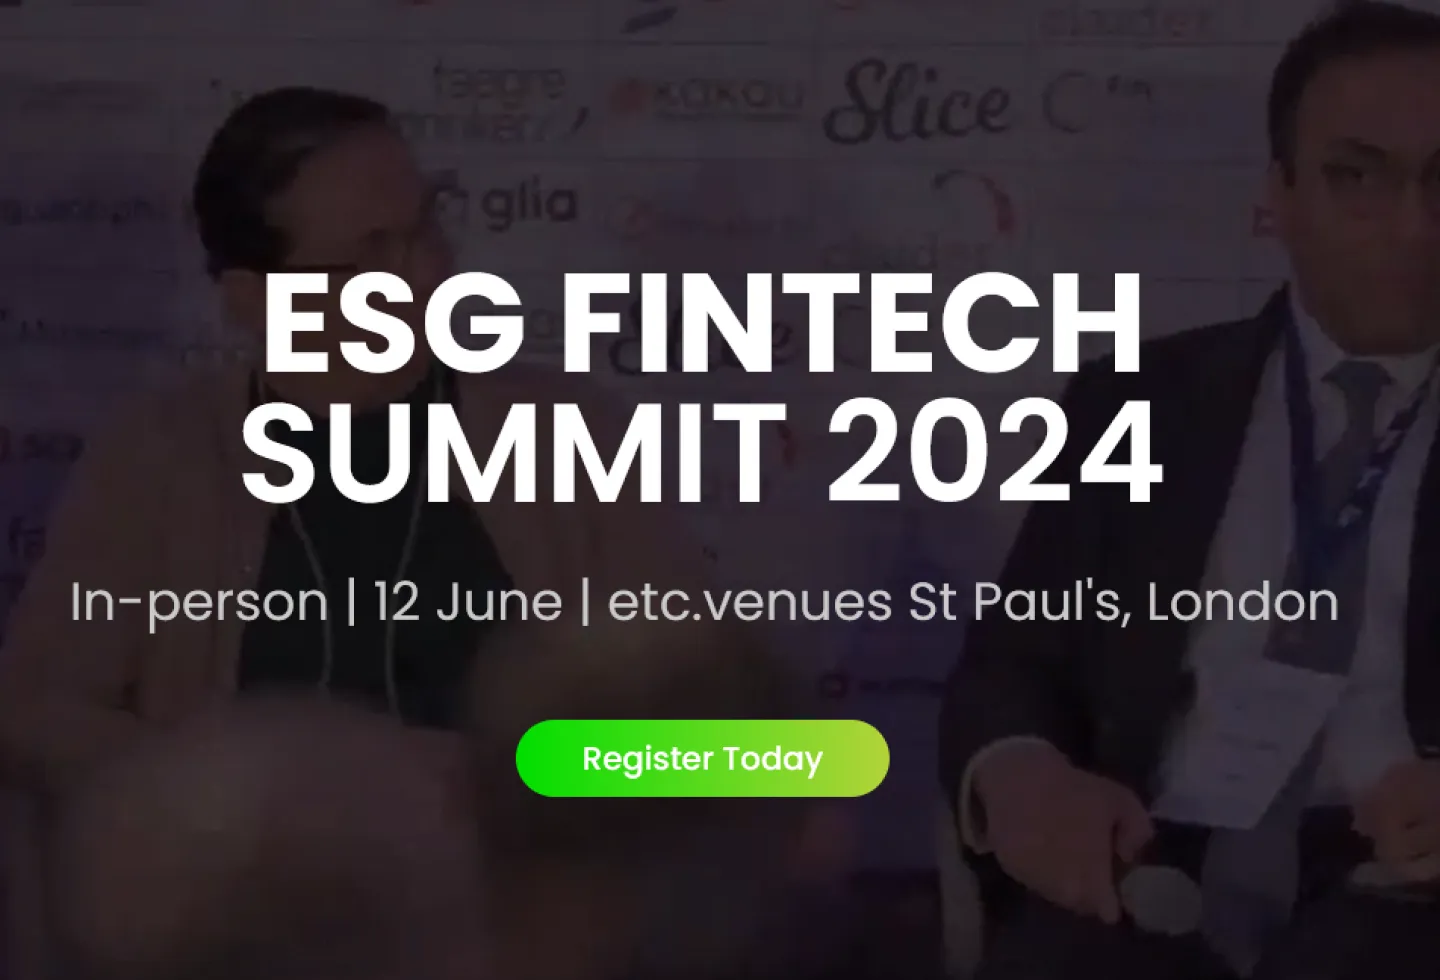 Image: The ESG FinTech Summit 2024